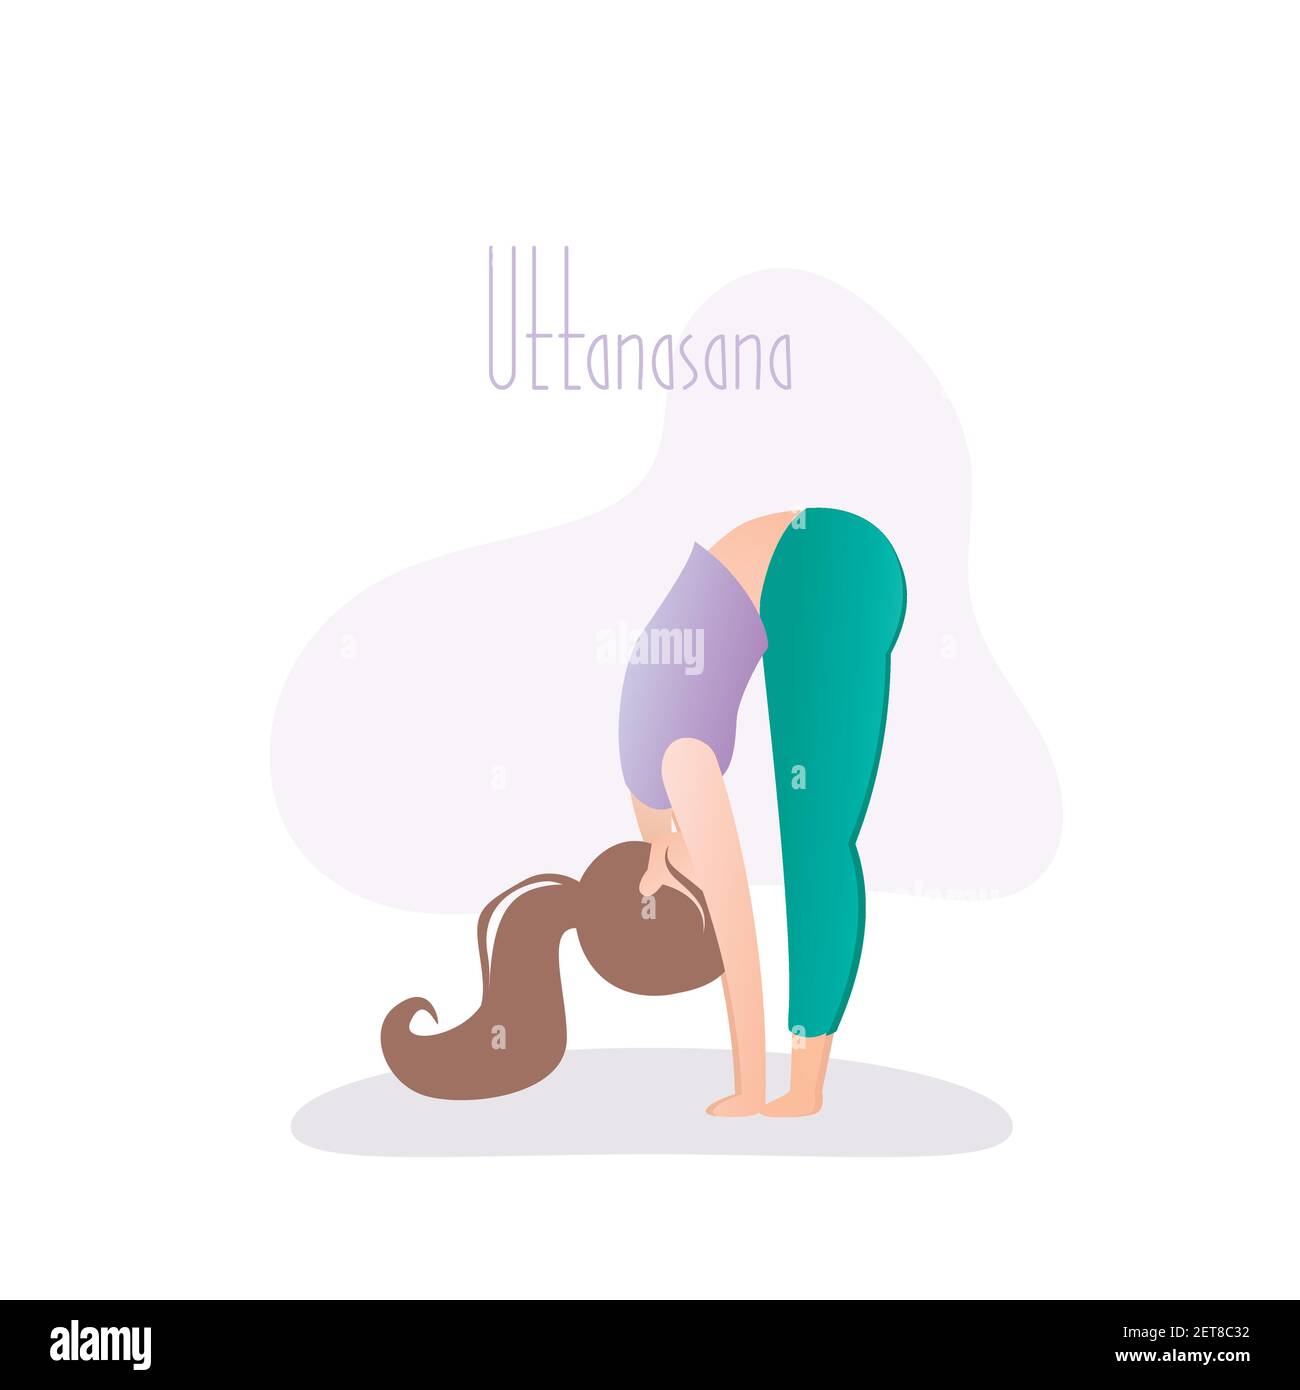 Girl standing in yoga pose, Standing Forward Bend pose or uttanasana asana in hatha yoga,vector illustration in trendy style Stock Vector